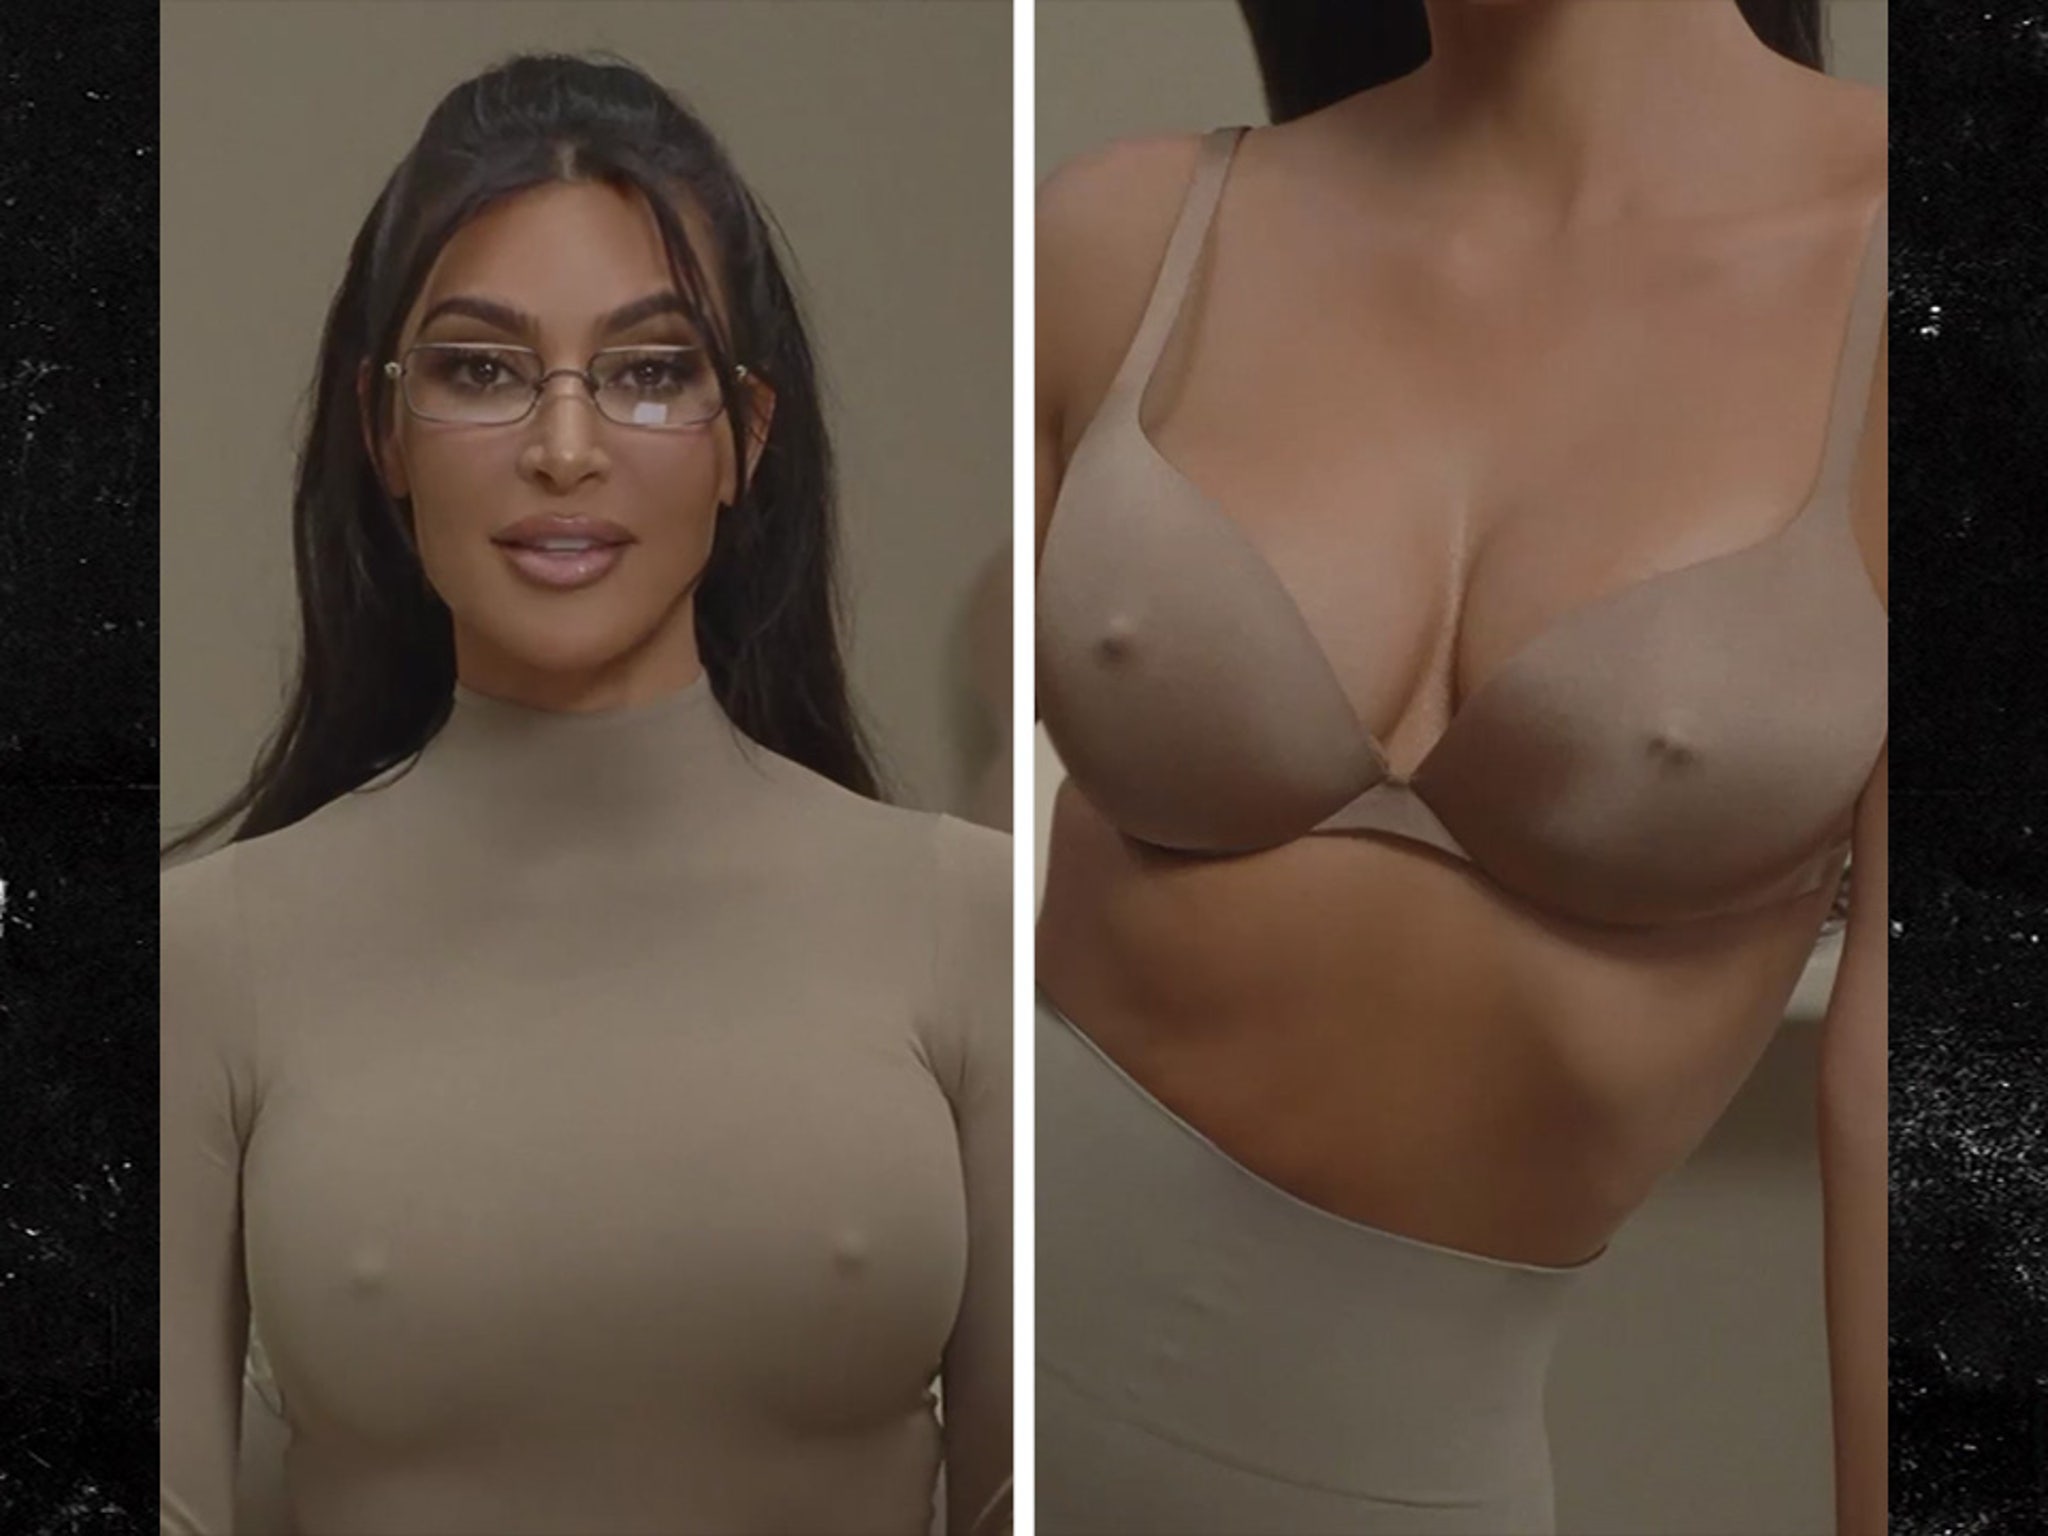 Kim Kardashian Introduces SKIMS Bra with Built-In Nipple